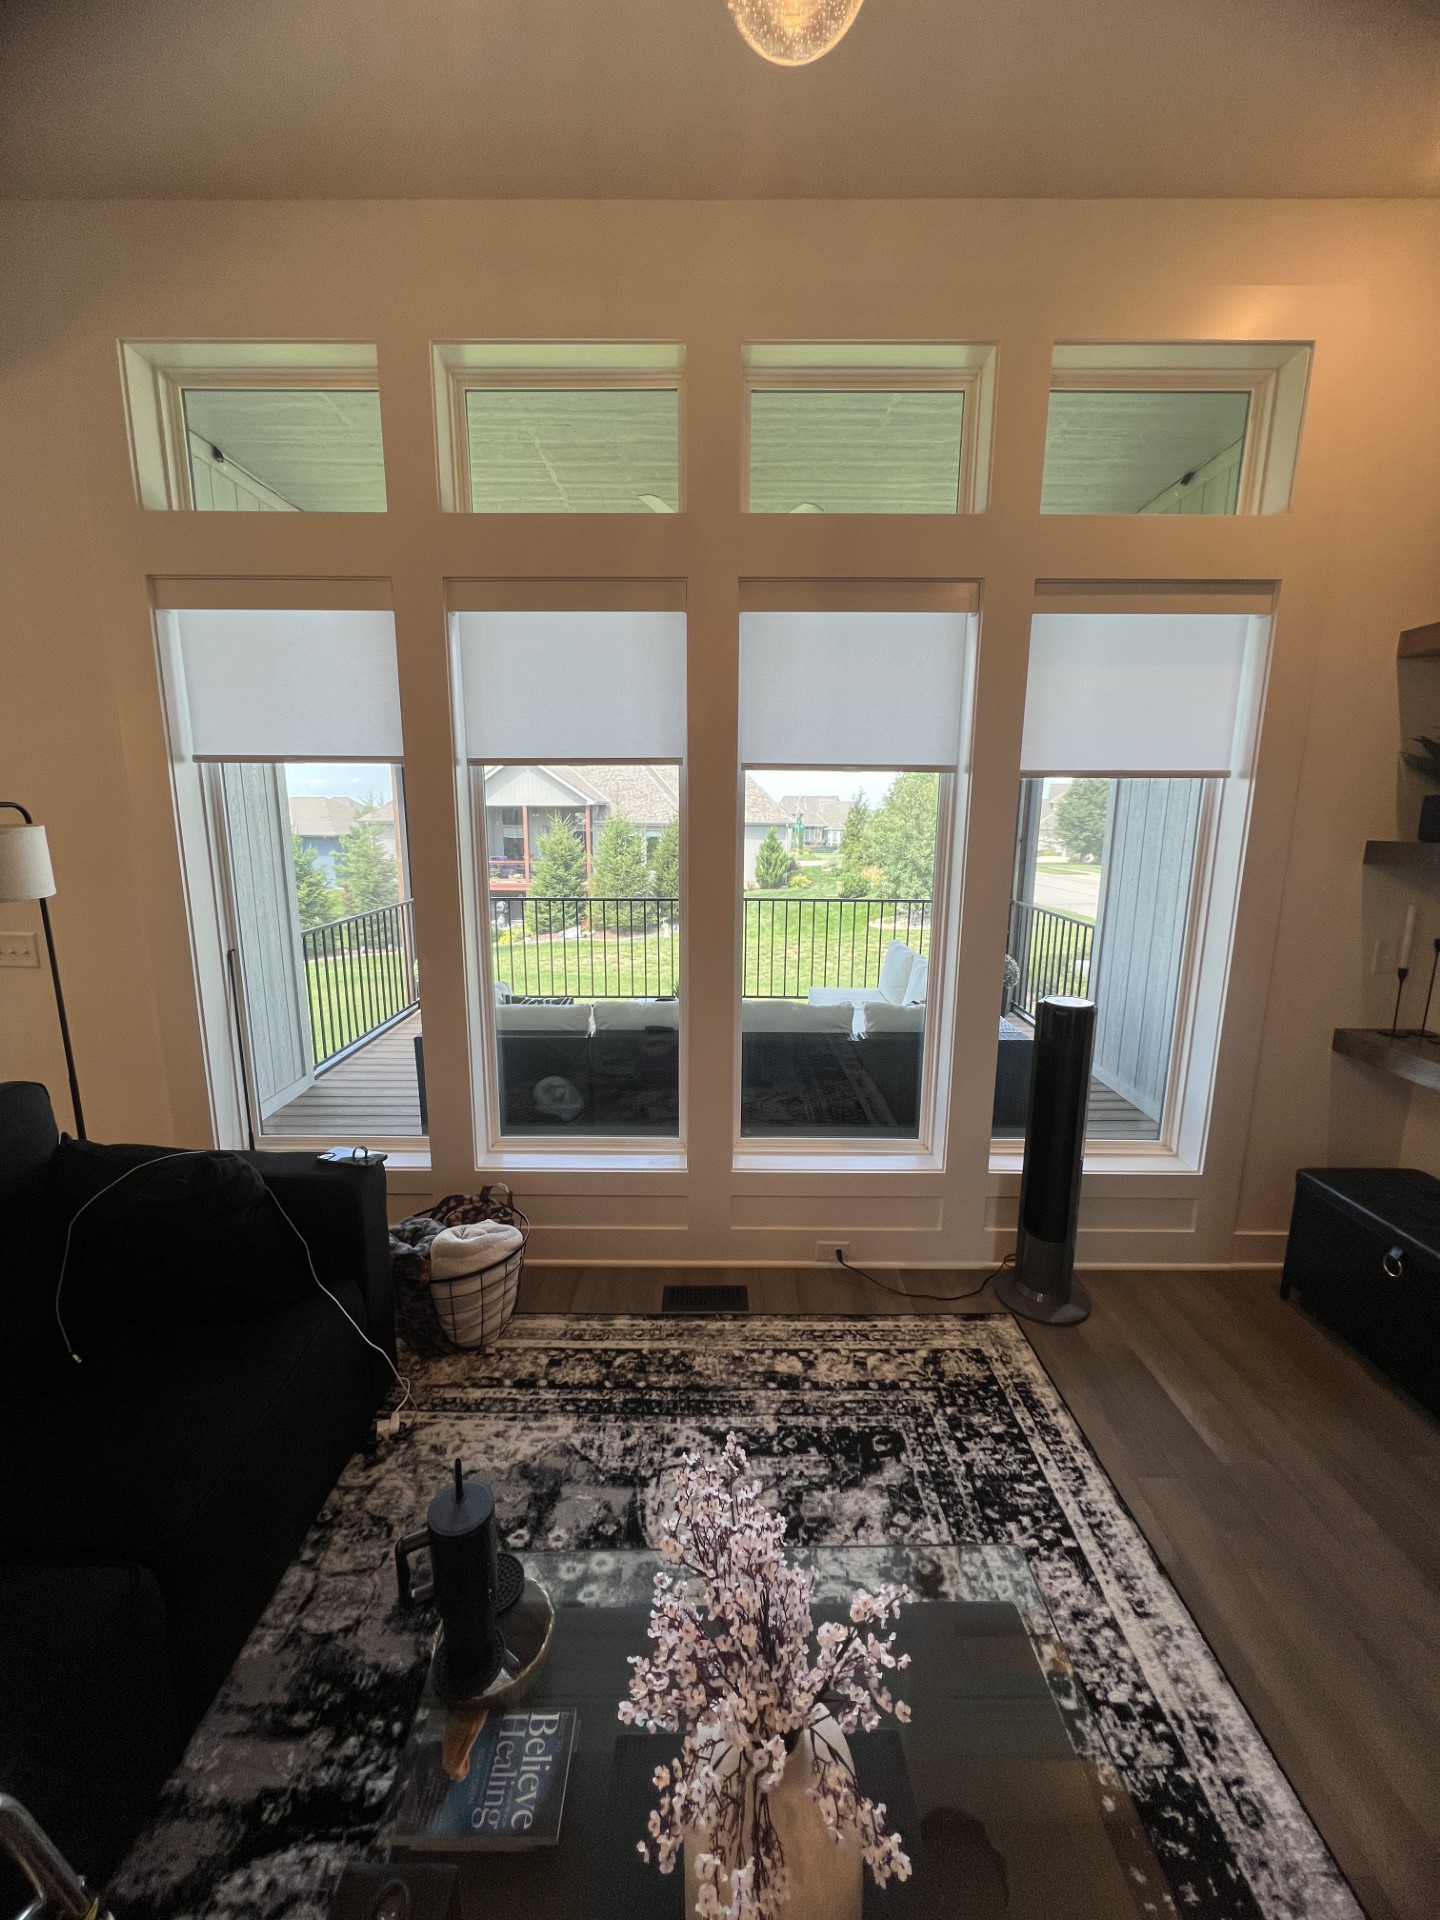 custom window shades in living room